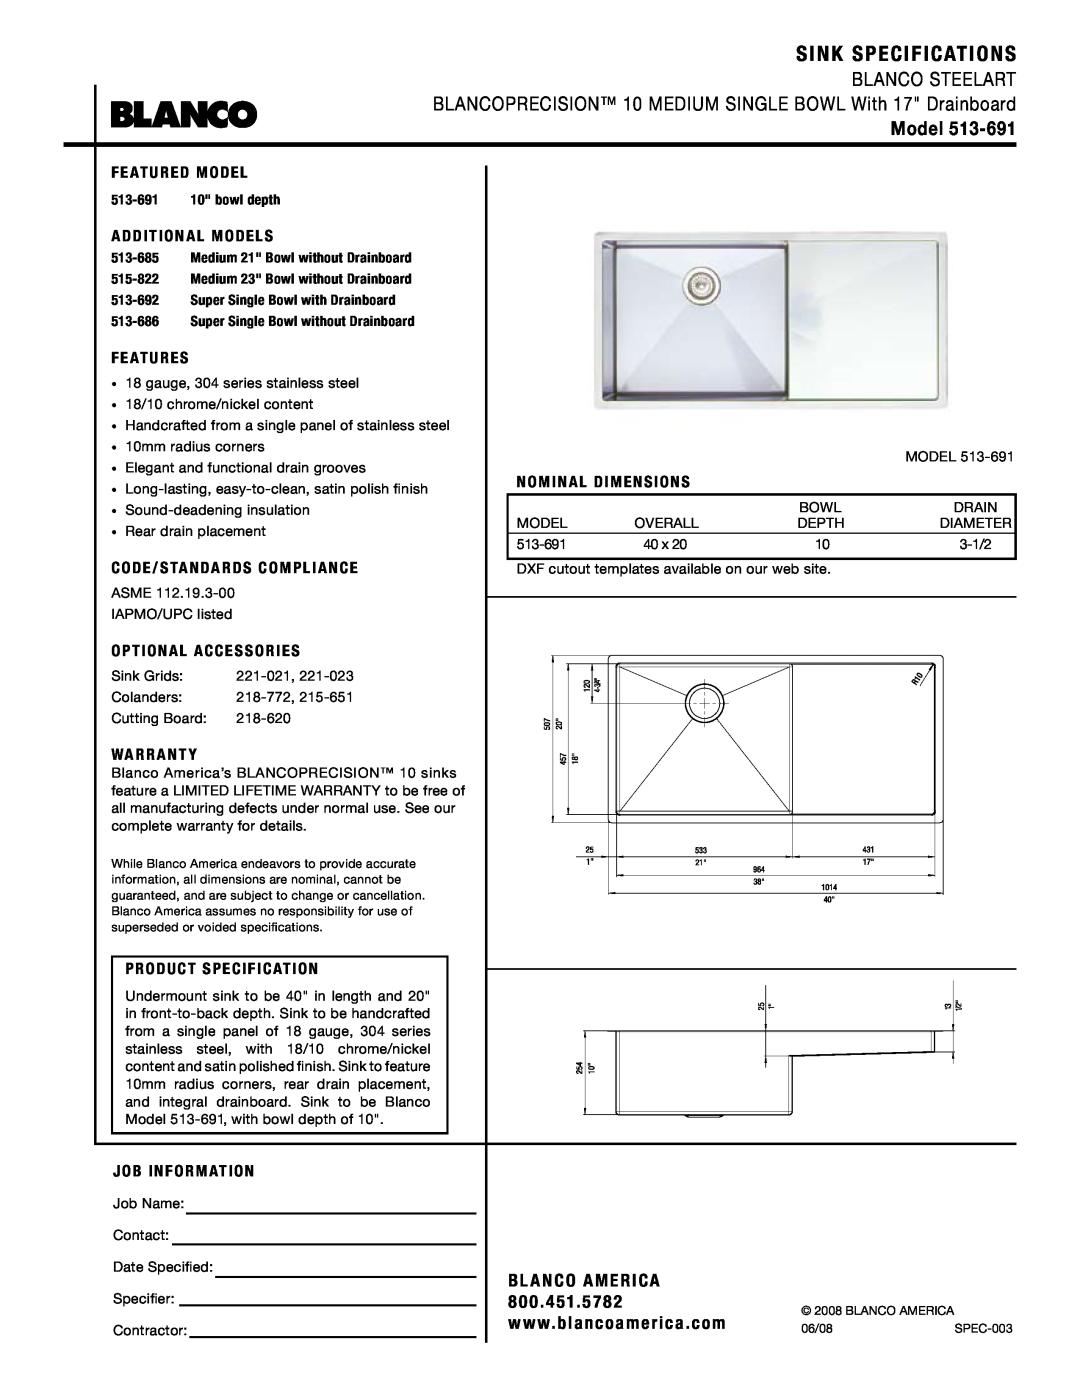 Blanco 513-691 warranty Sink Specifications, Blanco Steelart, Model, Bl Anco America, w w w. blancoamerica . com 